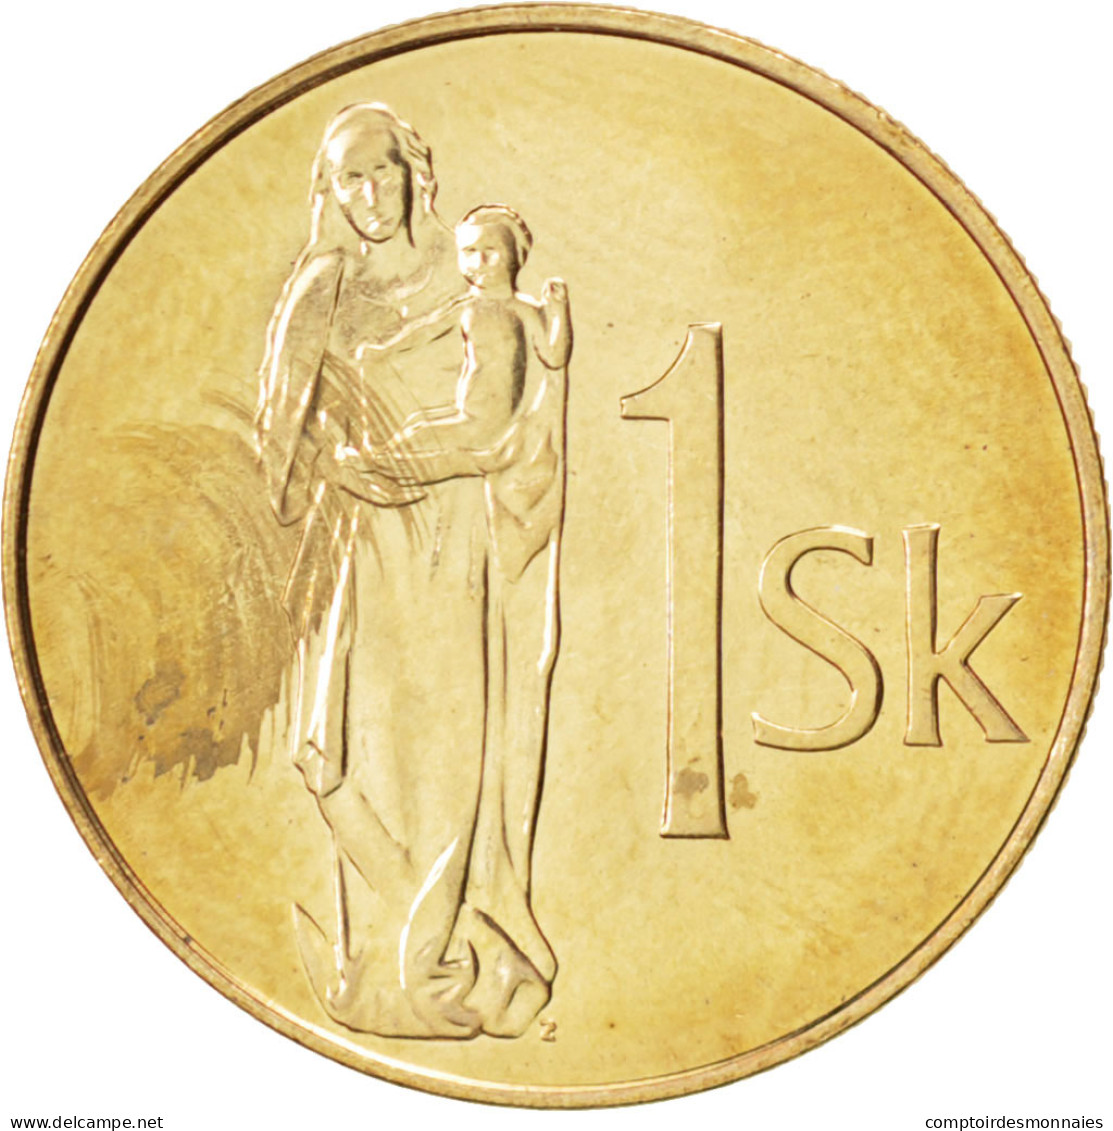 Monnaie, Slovaquie, Koruna, 2007, SPL, Bronze Plated Steel, KM:12 - Eslovaquia